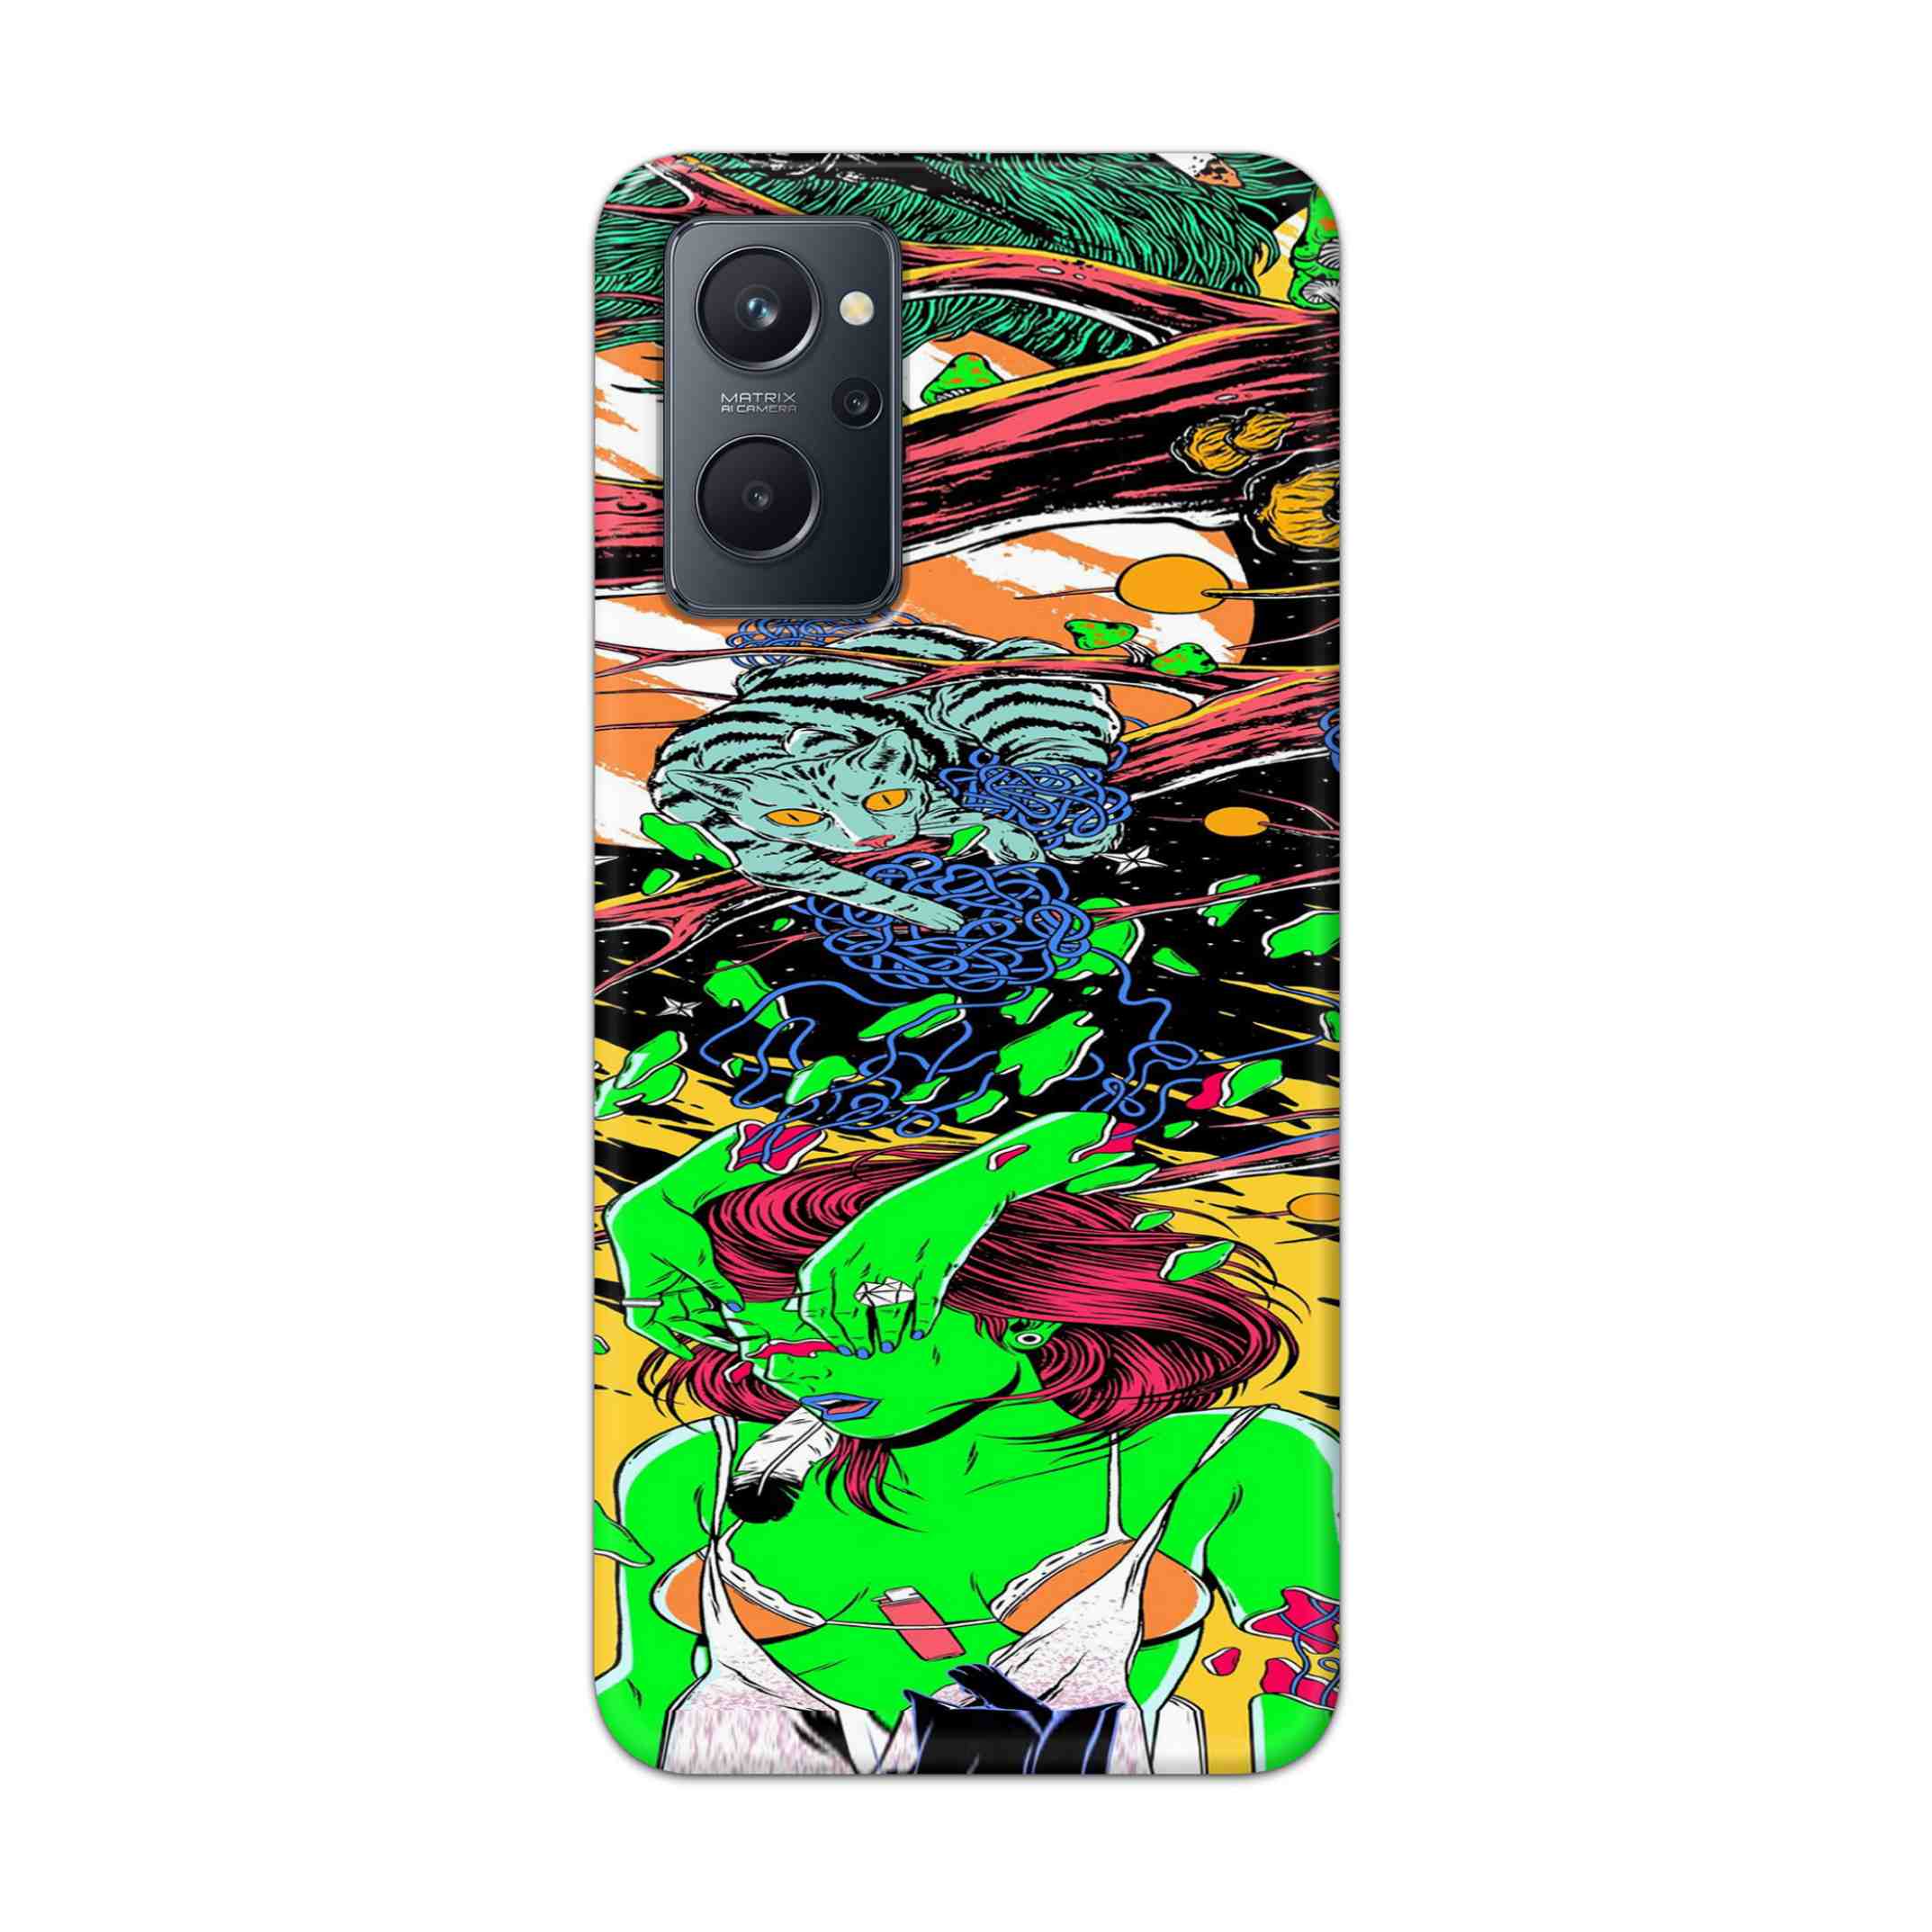 Buy Green Girl Art Hard Back Mobile Phone Case Cover For Realme 9i Online